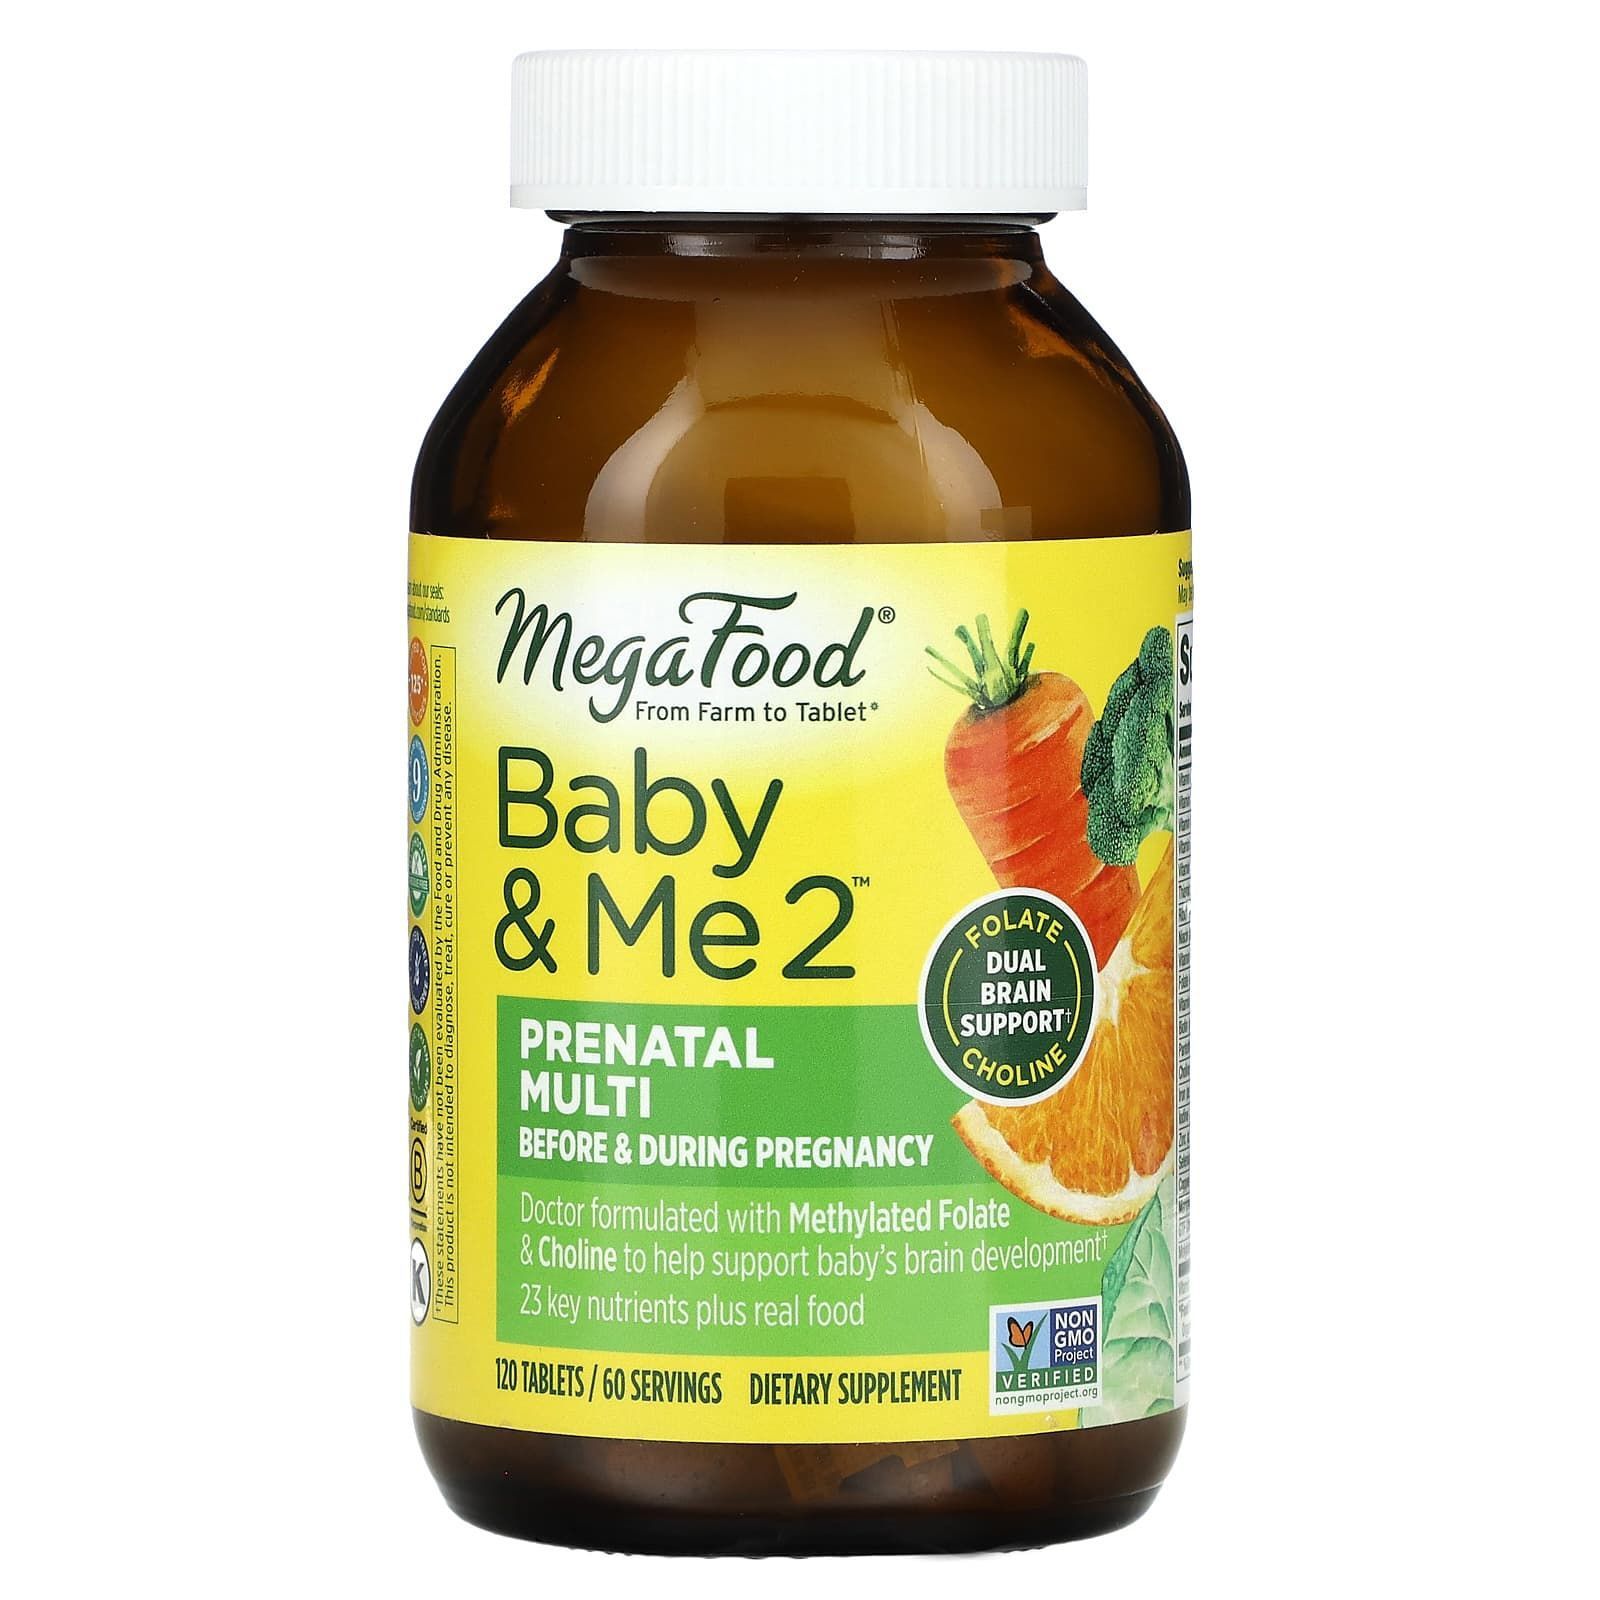 MegaFood, Baby & Me 2, Prenatal Multi, Мультивитамины для Беременных, 60 таблеток